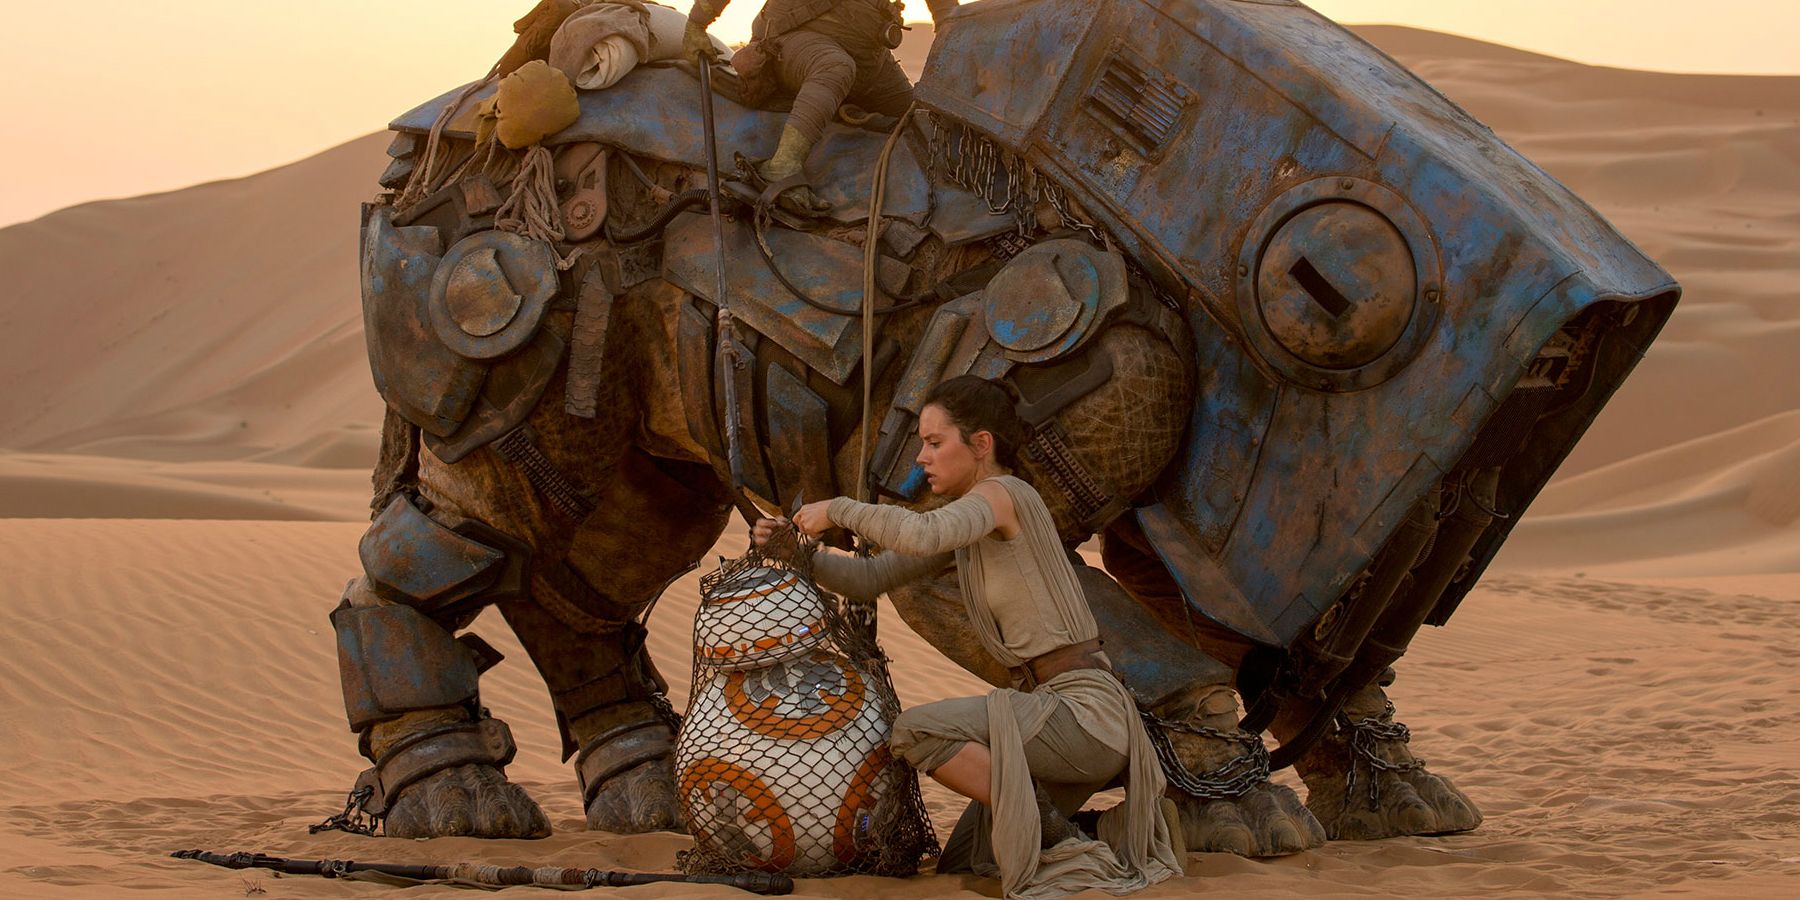 Rey and BB-8 on Jakku in Star Wars The Force Awakens